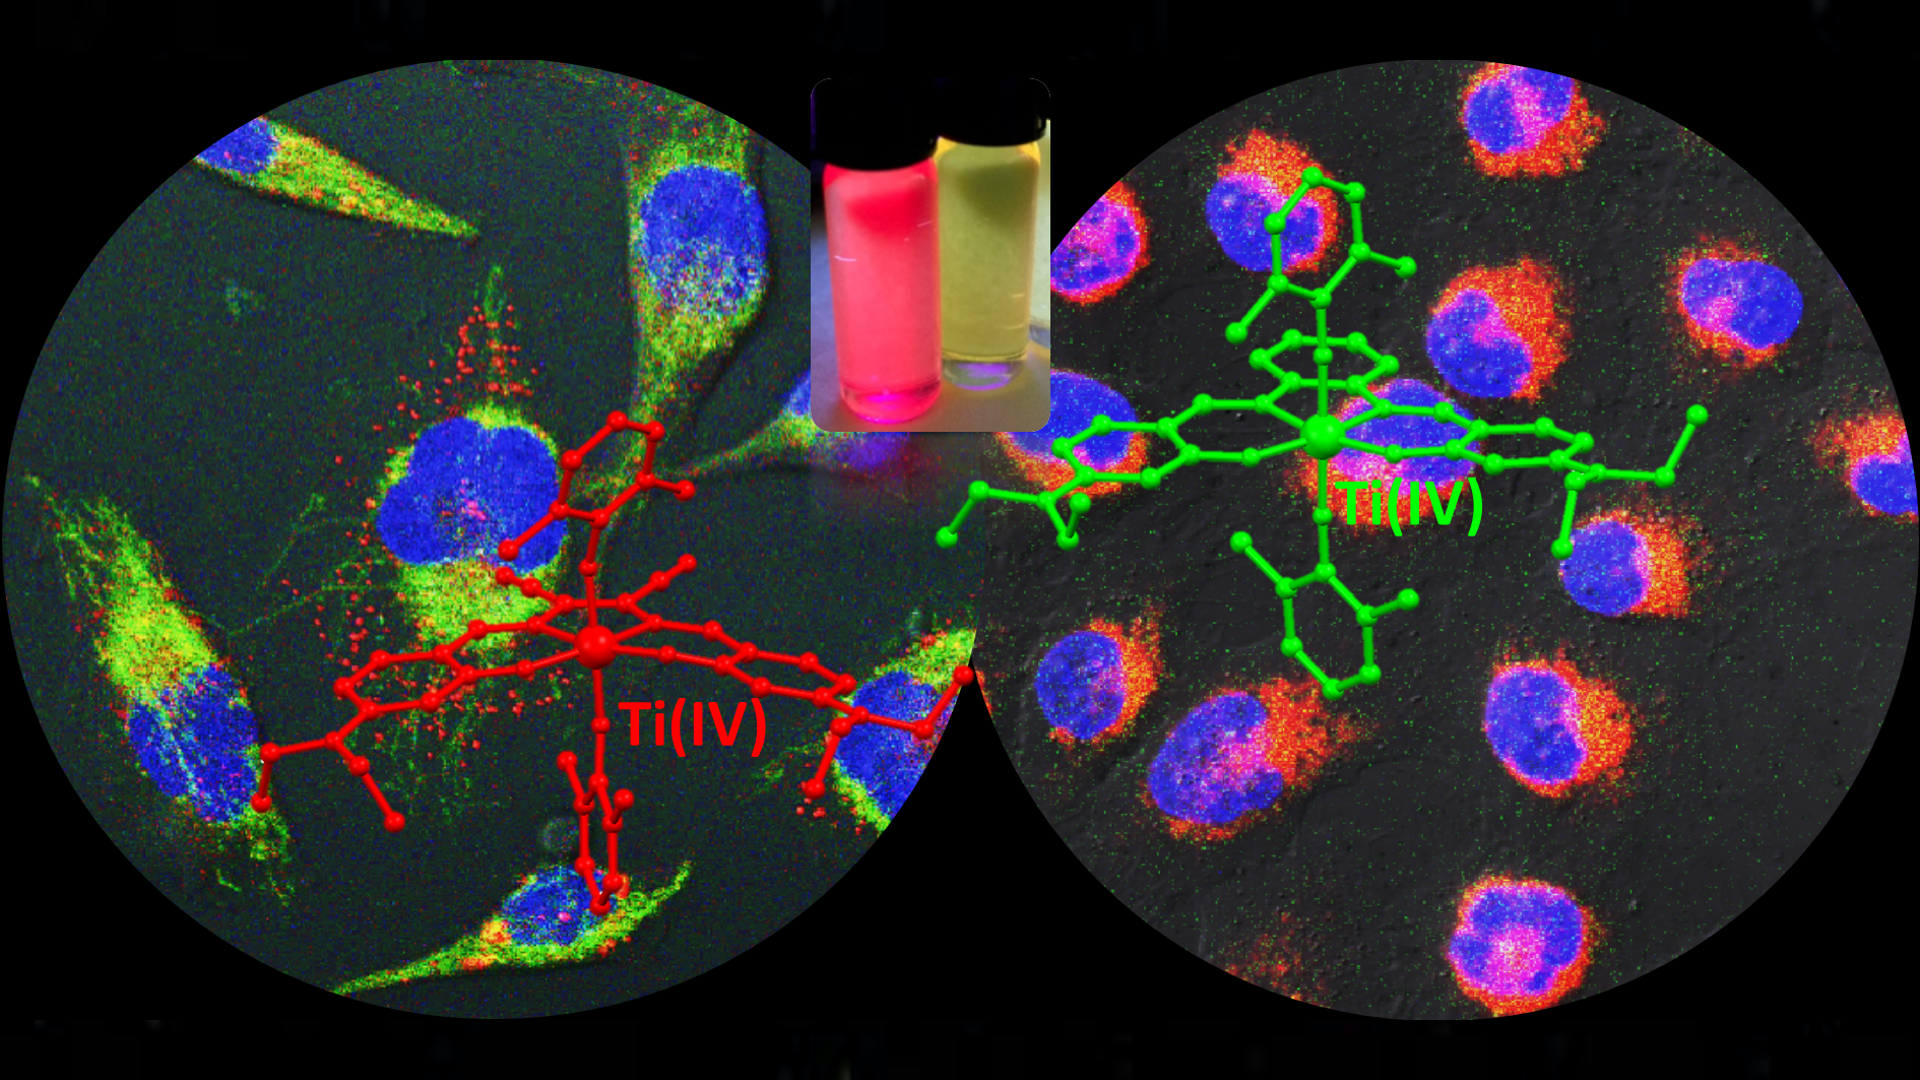 fluorescent titanium(IV) salen complexes for cell imaging